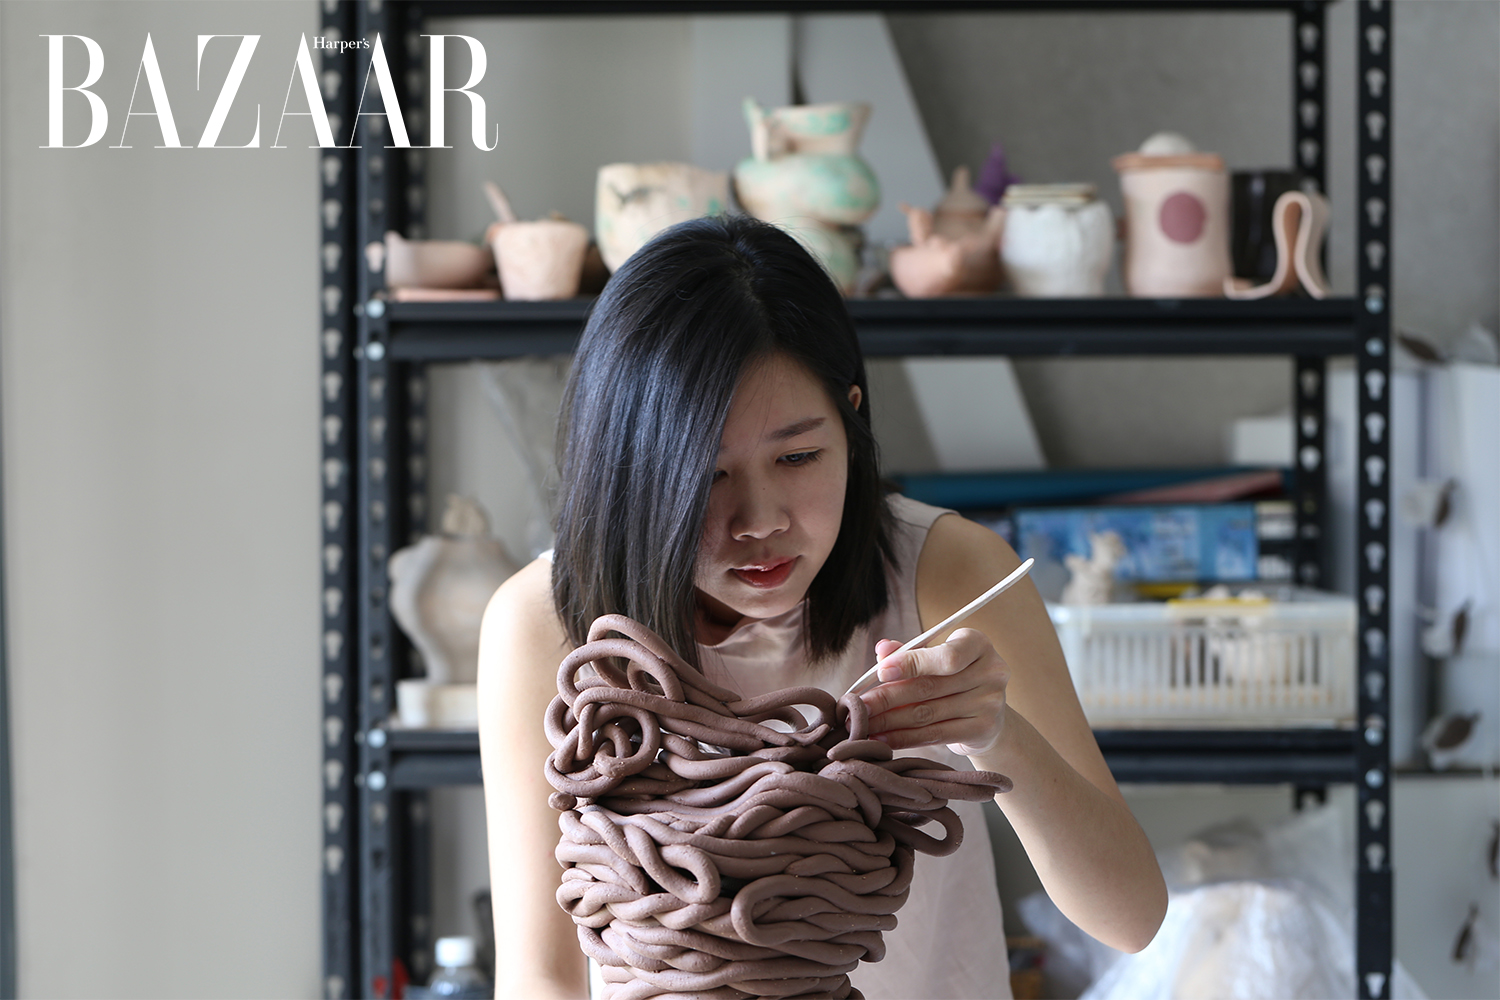 Harpers Bazaar lop hoc lam gom Duong pottery 03 - Tự tay làm gốm Raku kiểu Nhật tại Duong Pottery Studio